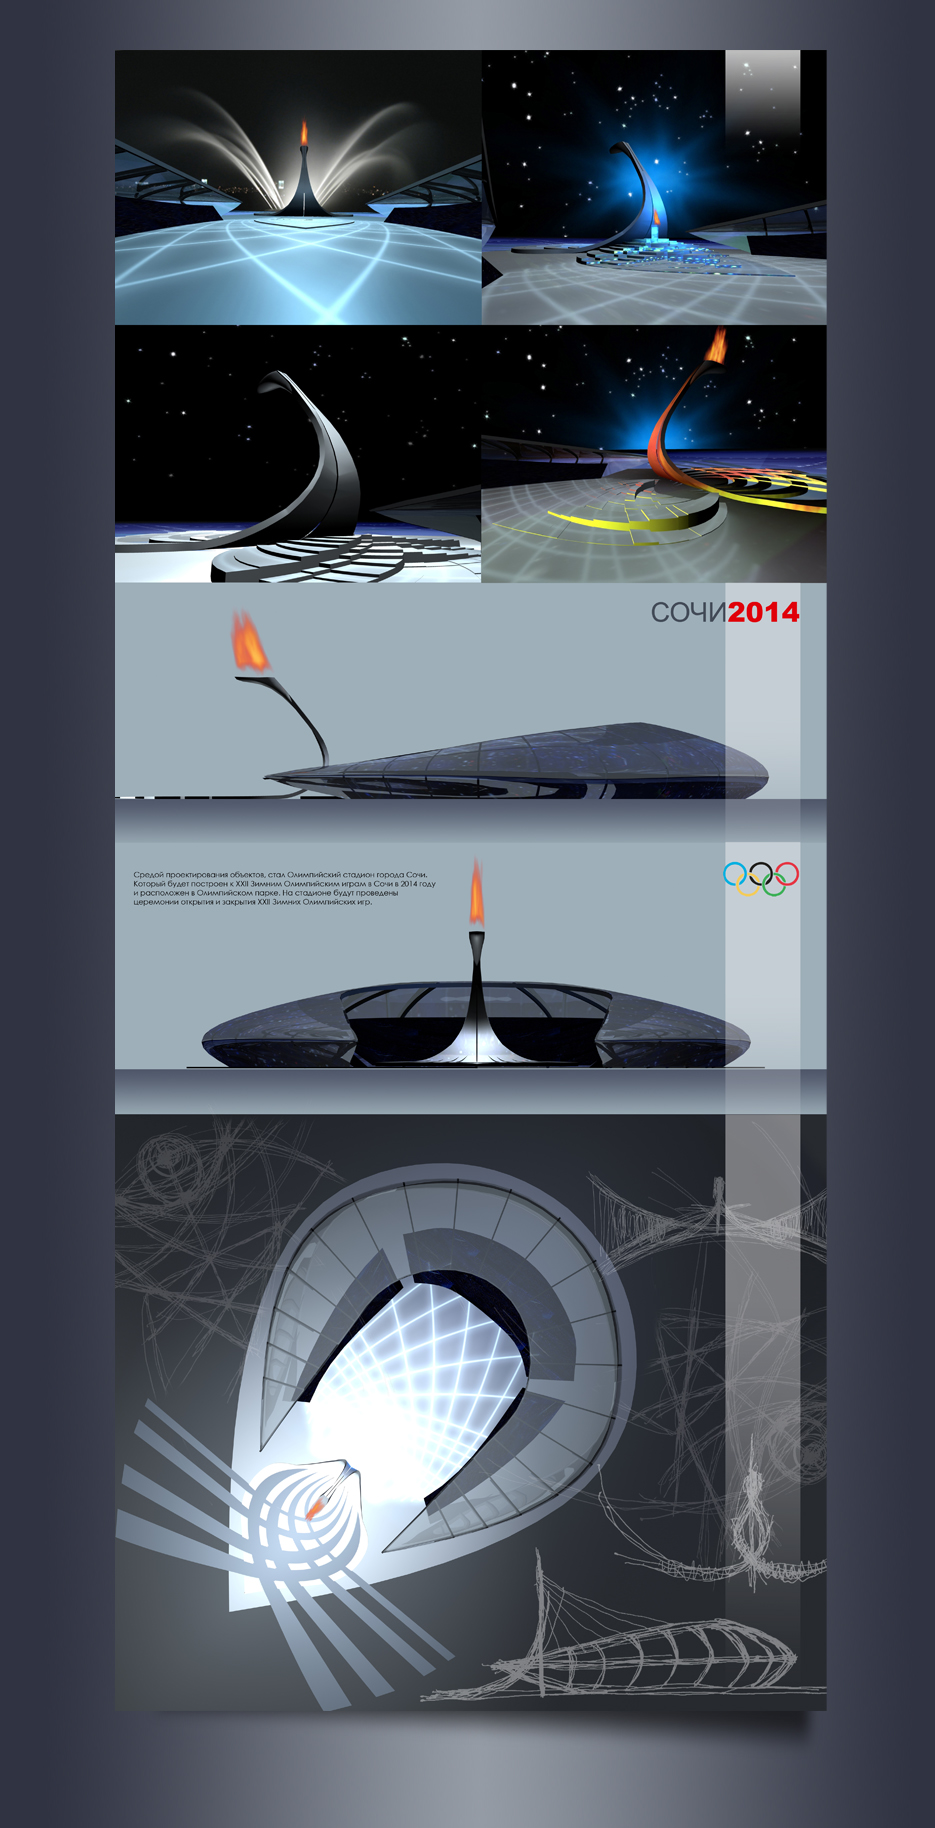 Огонь олимпиады 2014 (2)